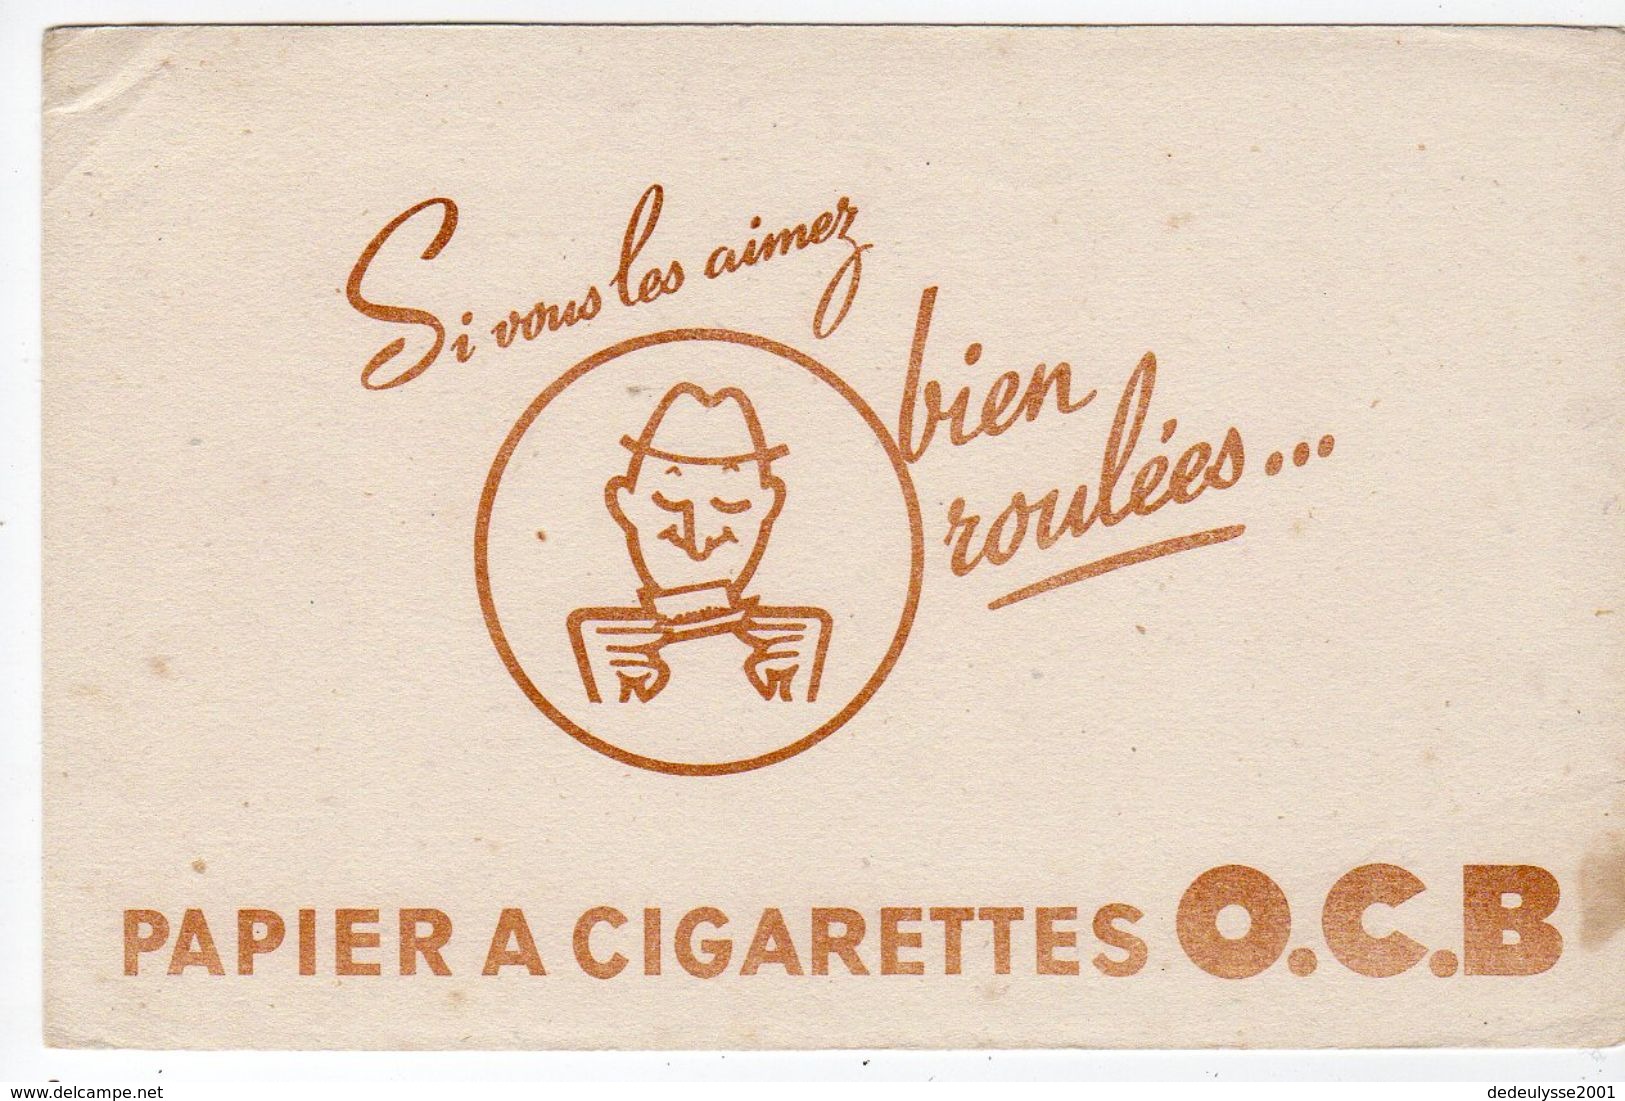 Oct17   79992   Buvard    Papier à Cigarettes OCB - Tabac & Cigarettes